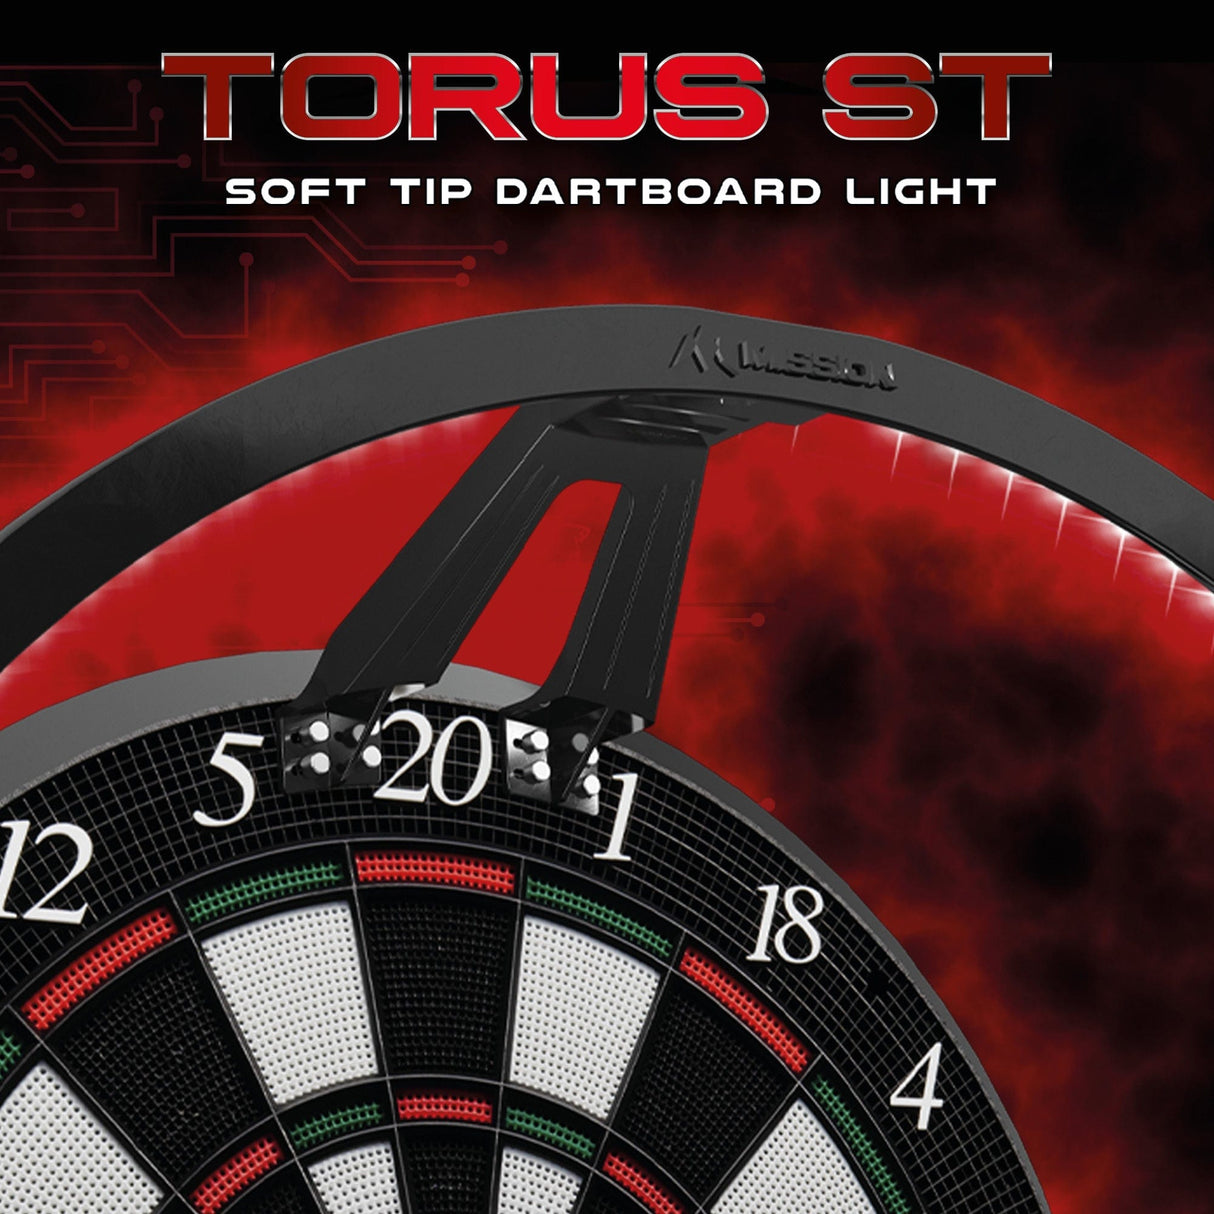 Mission Torus ST Dartboard Lighting - for Soft Tip Dartboards - Black - USB - Bright White Light